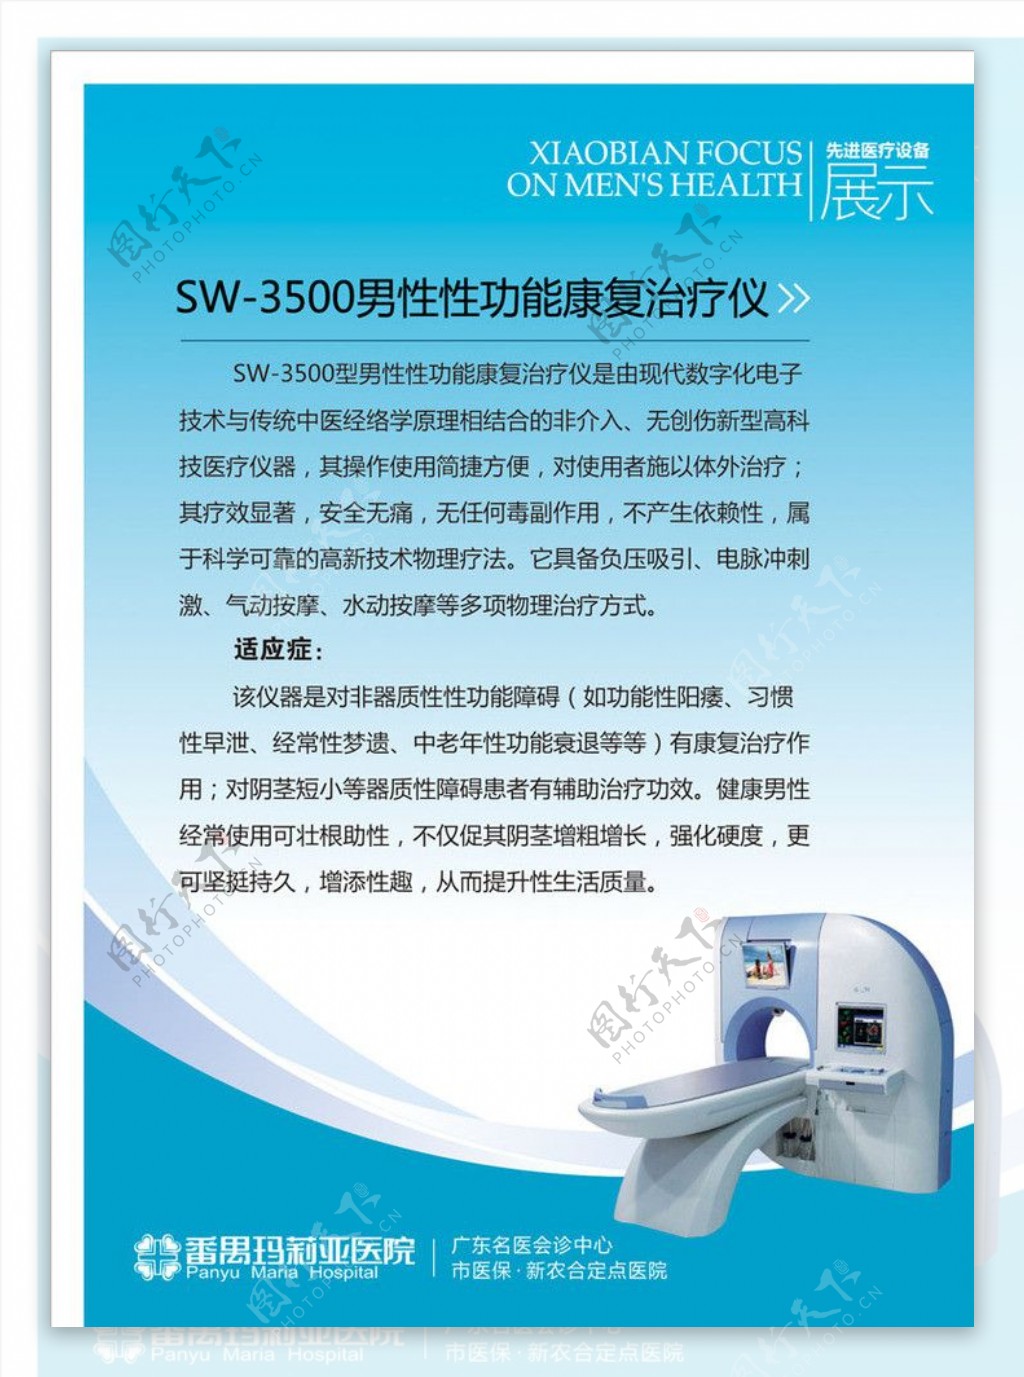 SW3500仪器图片